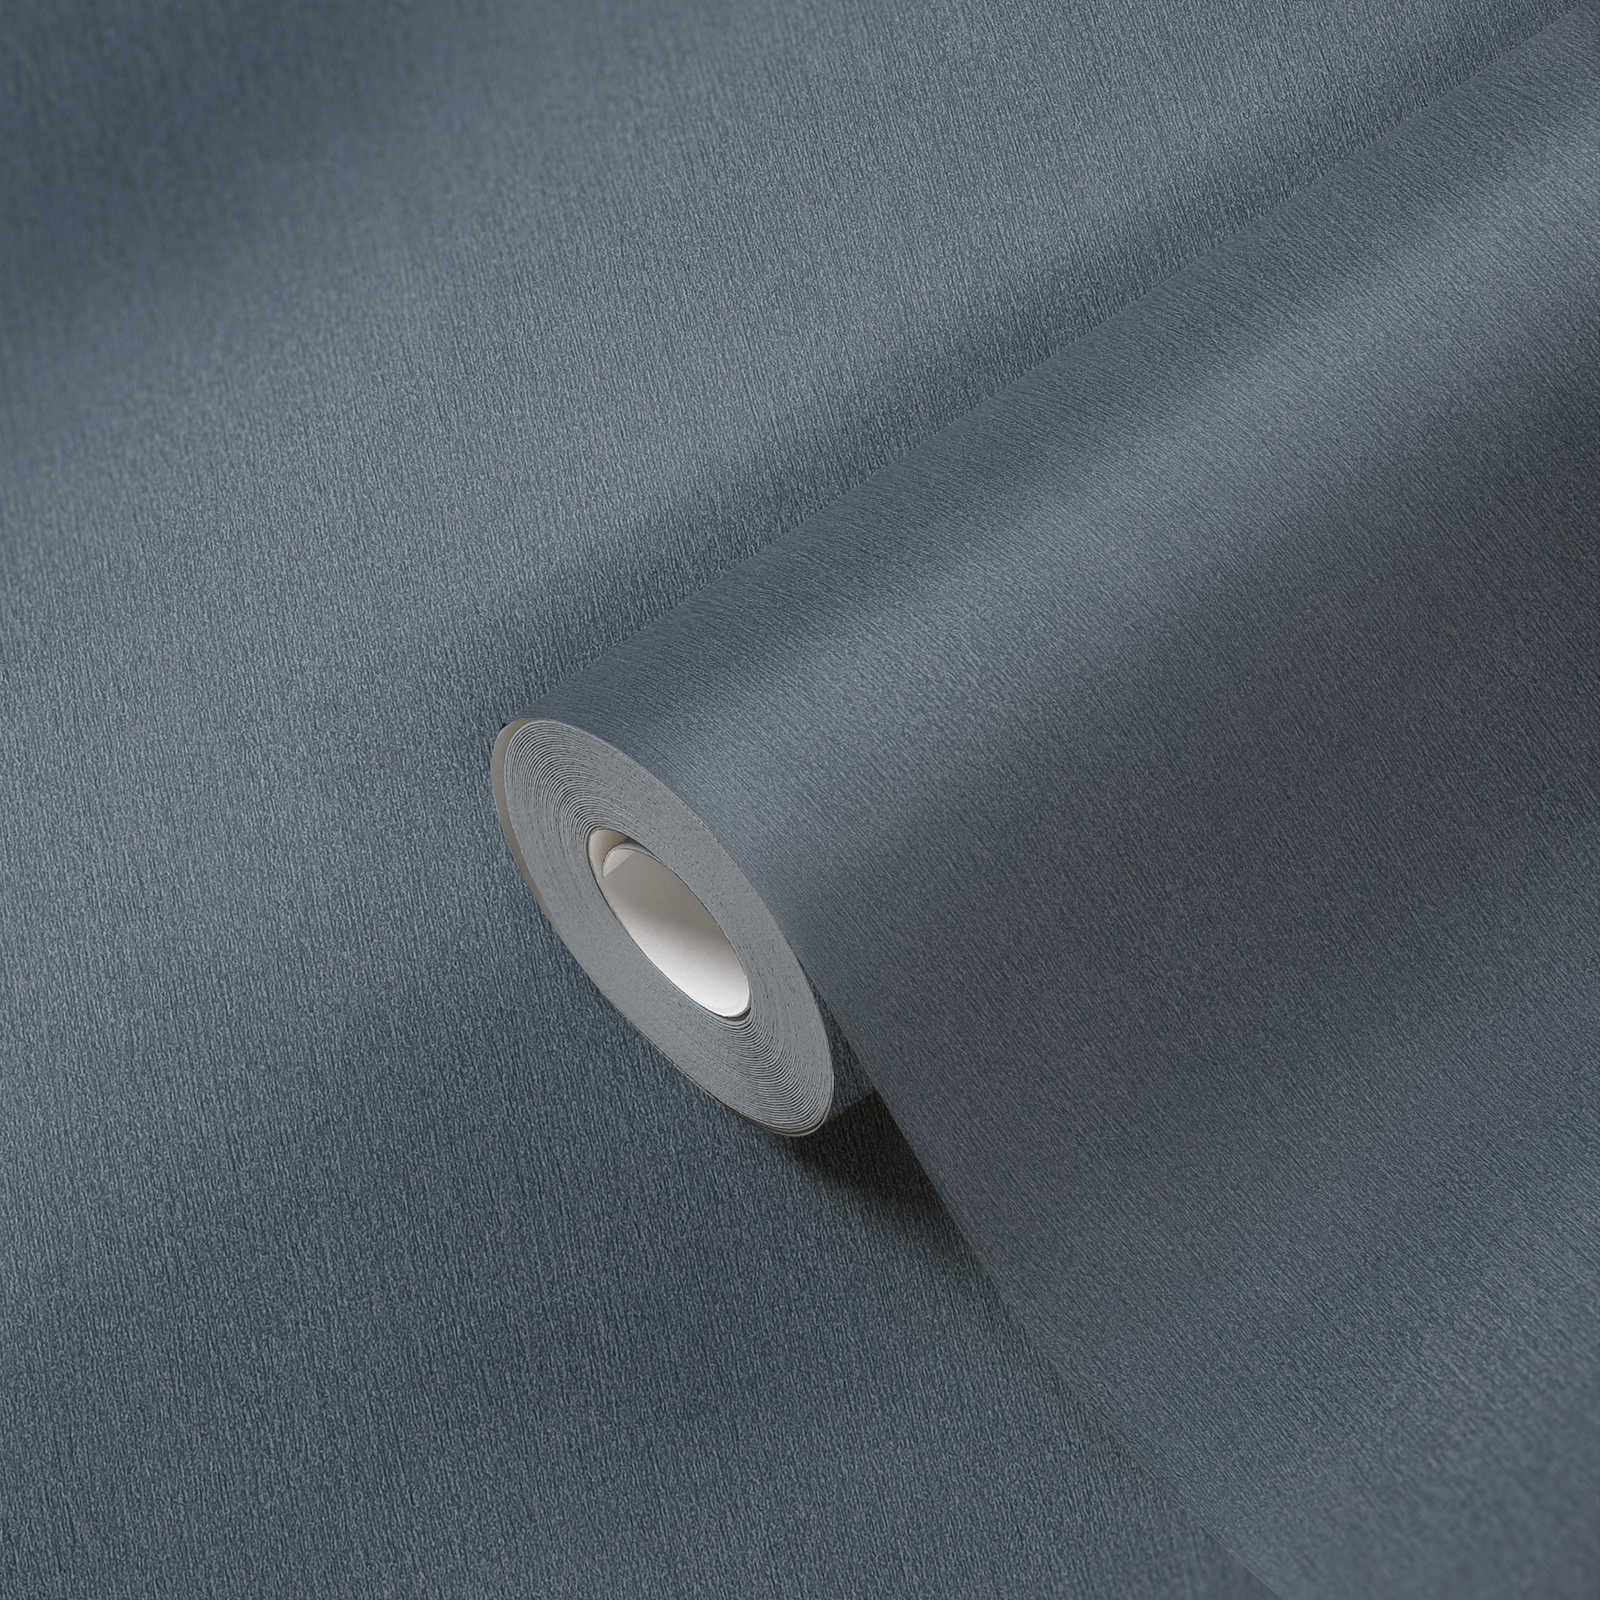             Dark grey wallpaper non-woven, monochrome with colour hatching
        